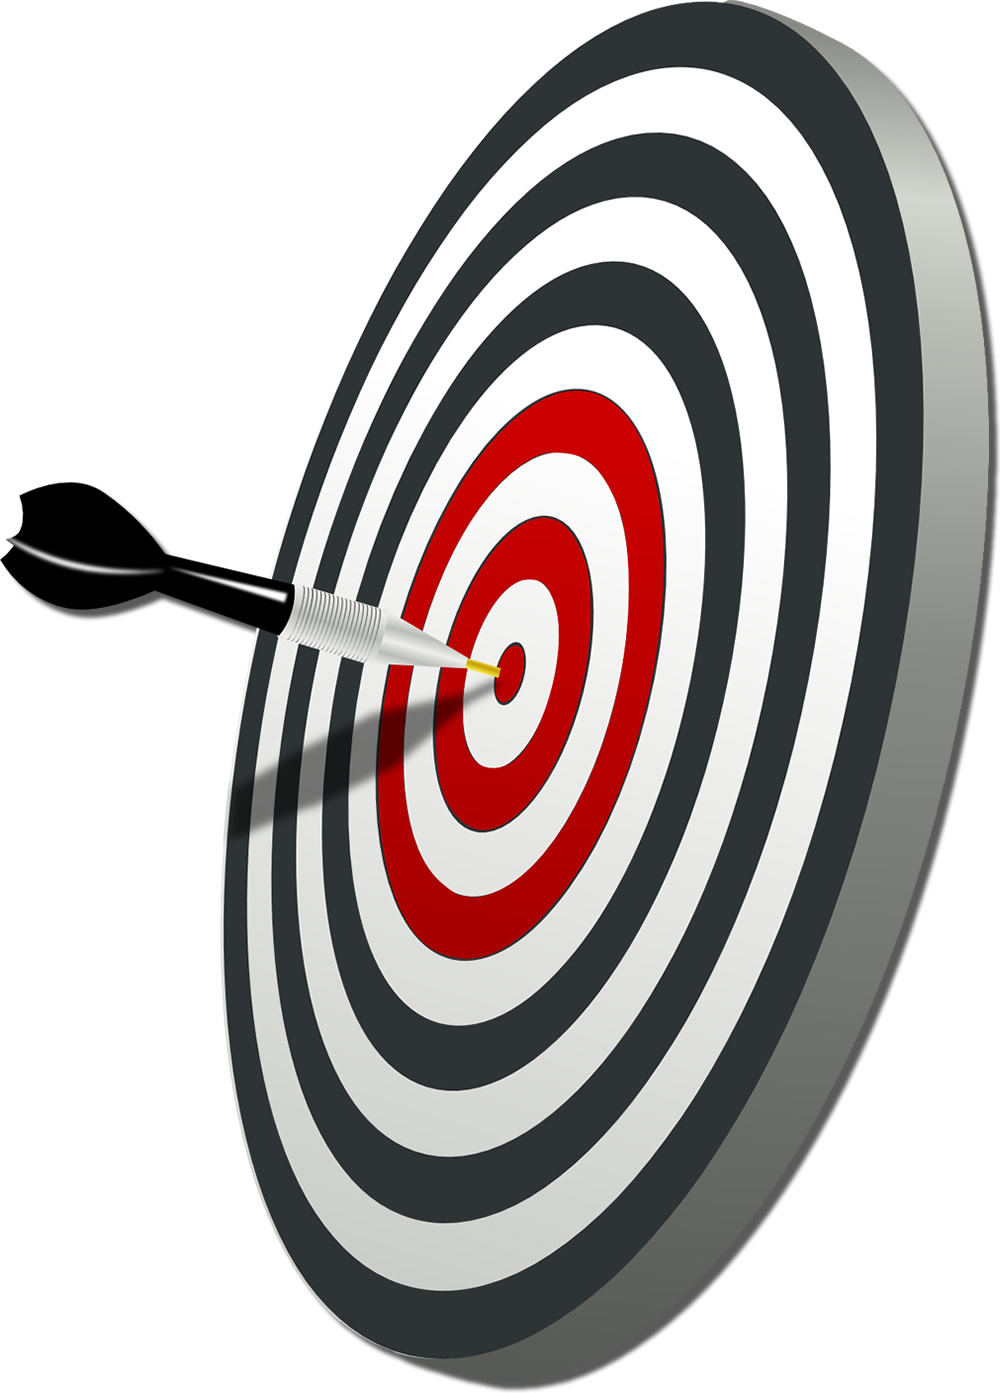 Objectivity can lead to a new revenue bullseye